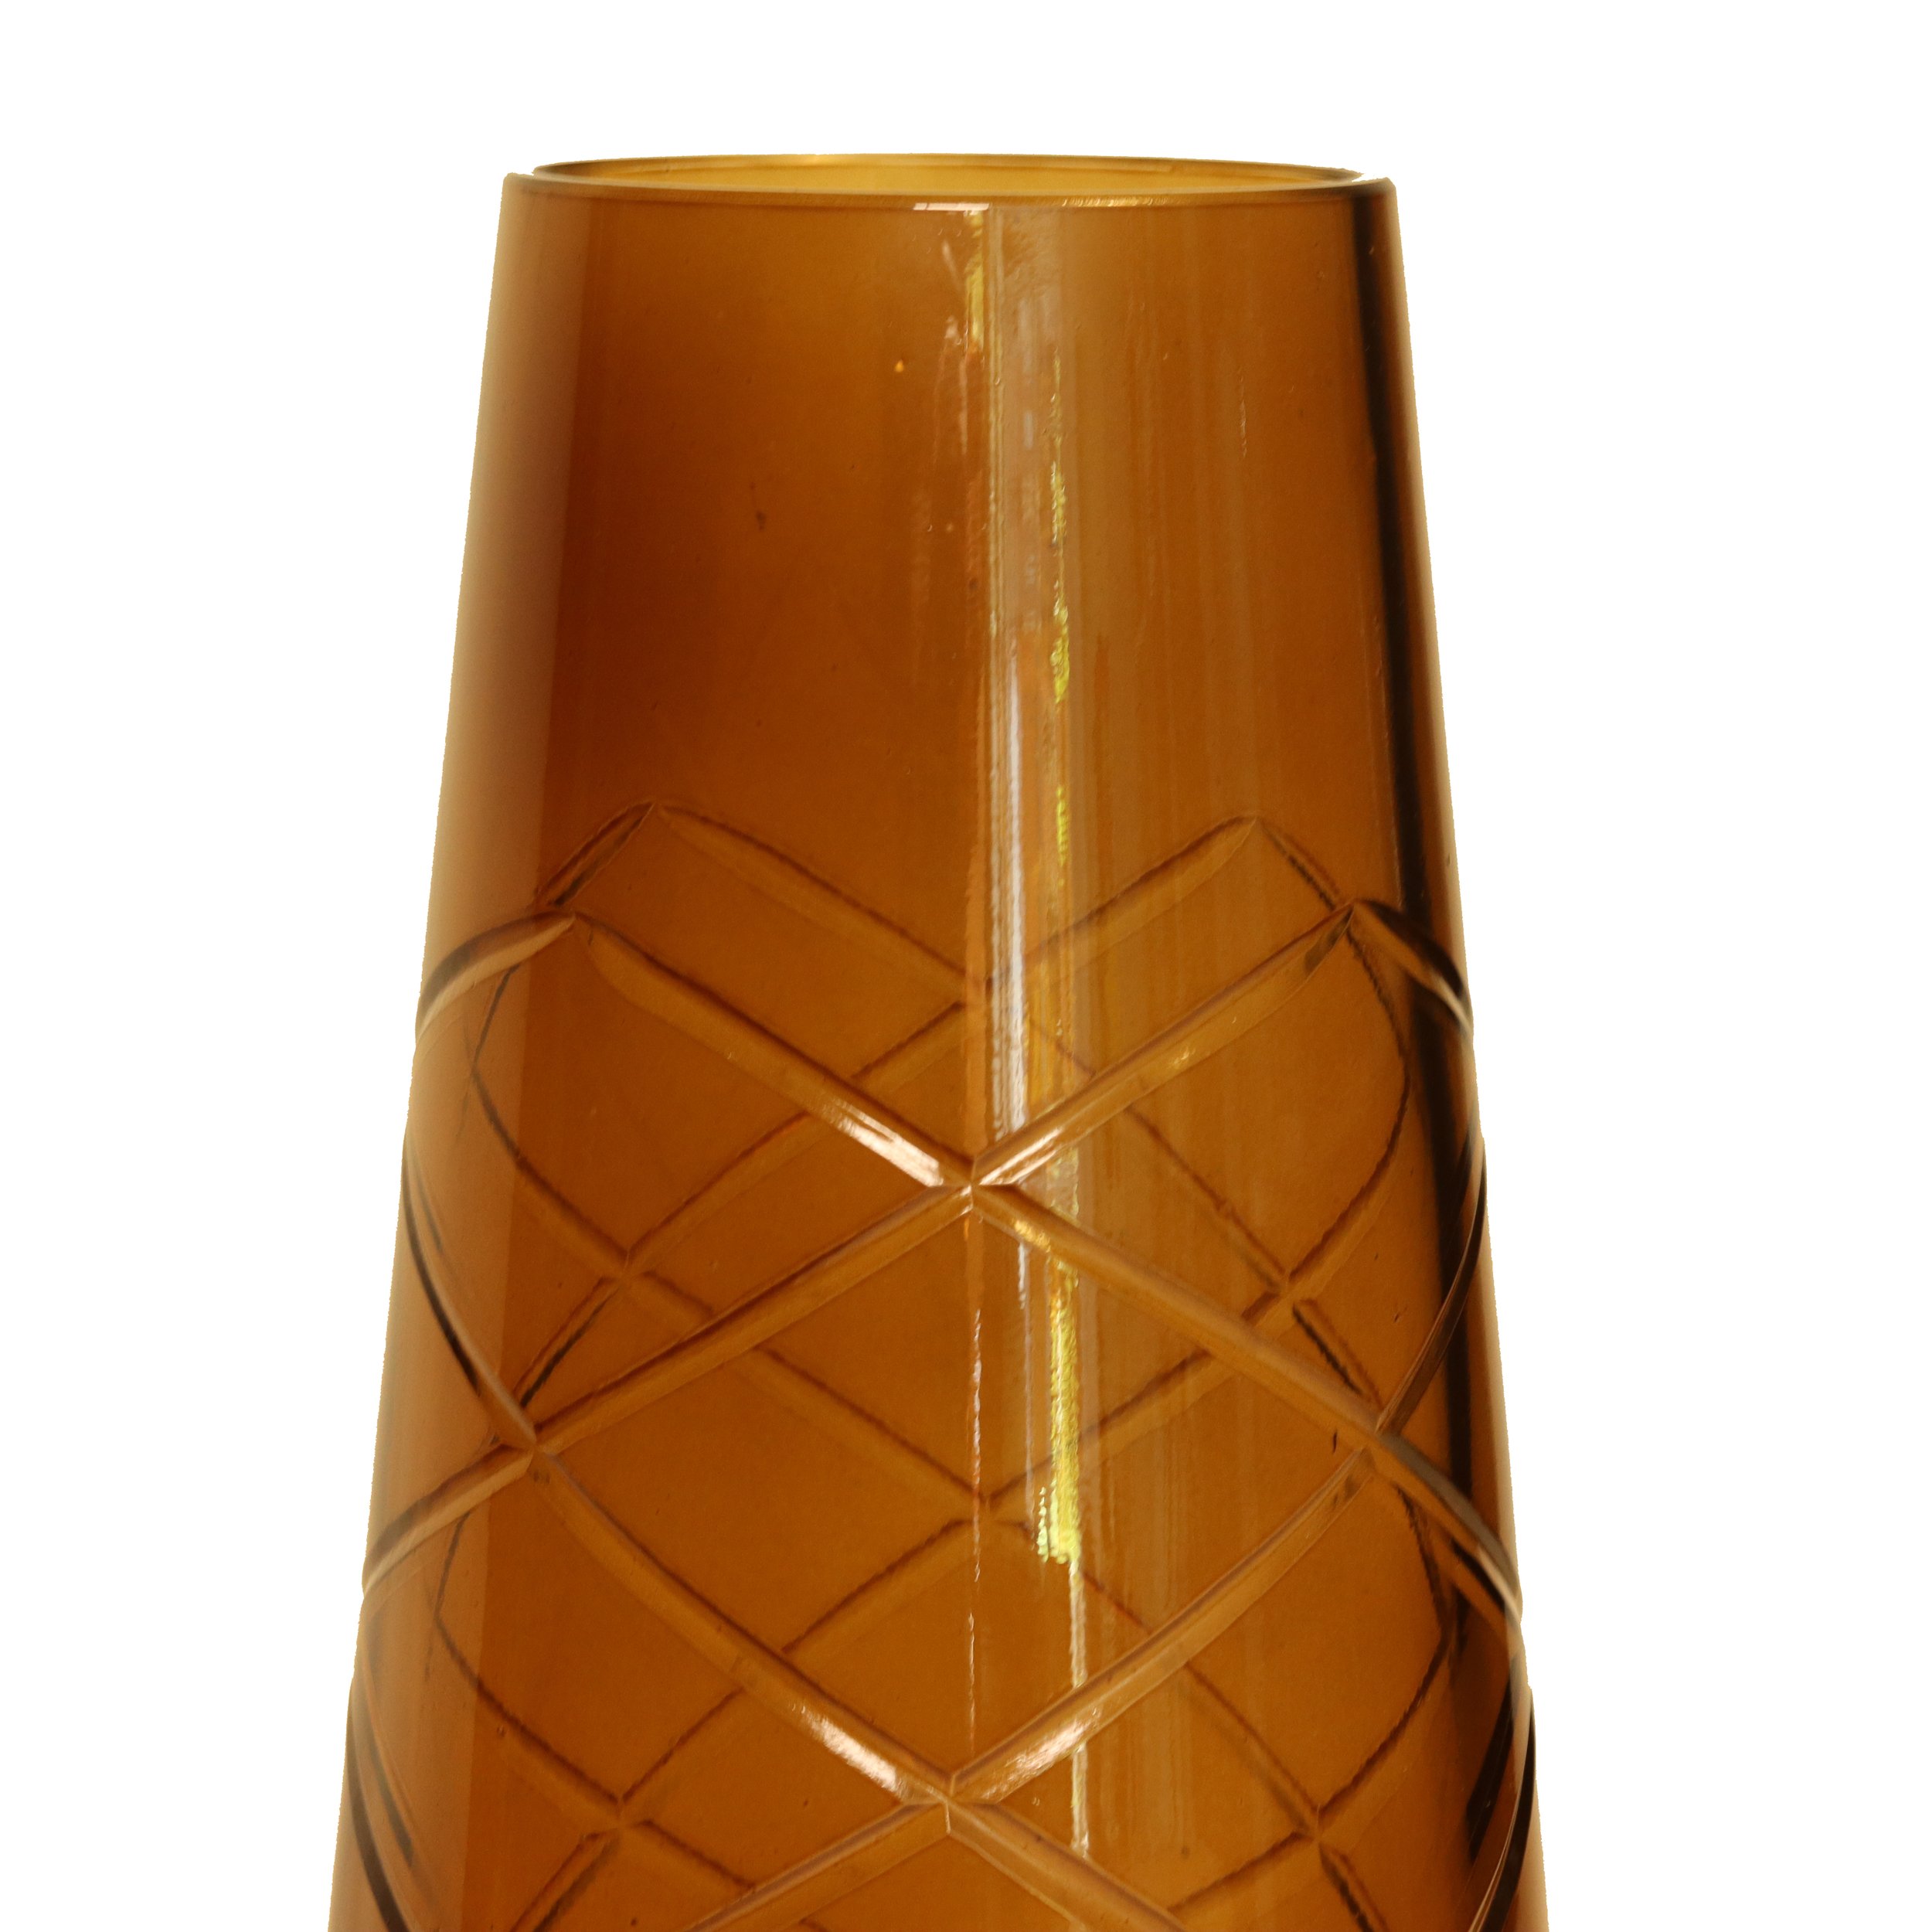 2K1M-Girata-Murano Vase-CL01.jpg